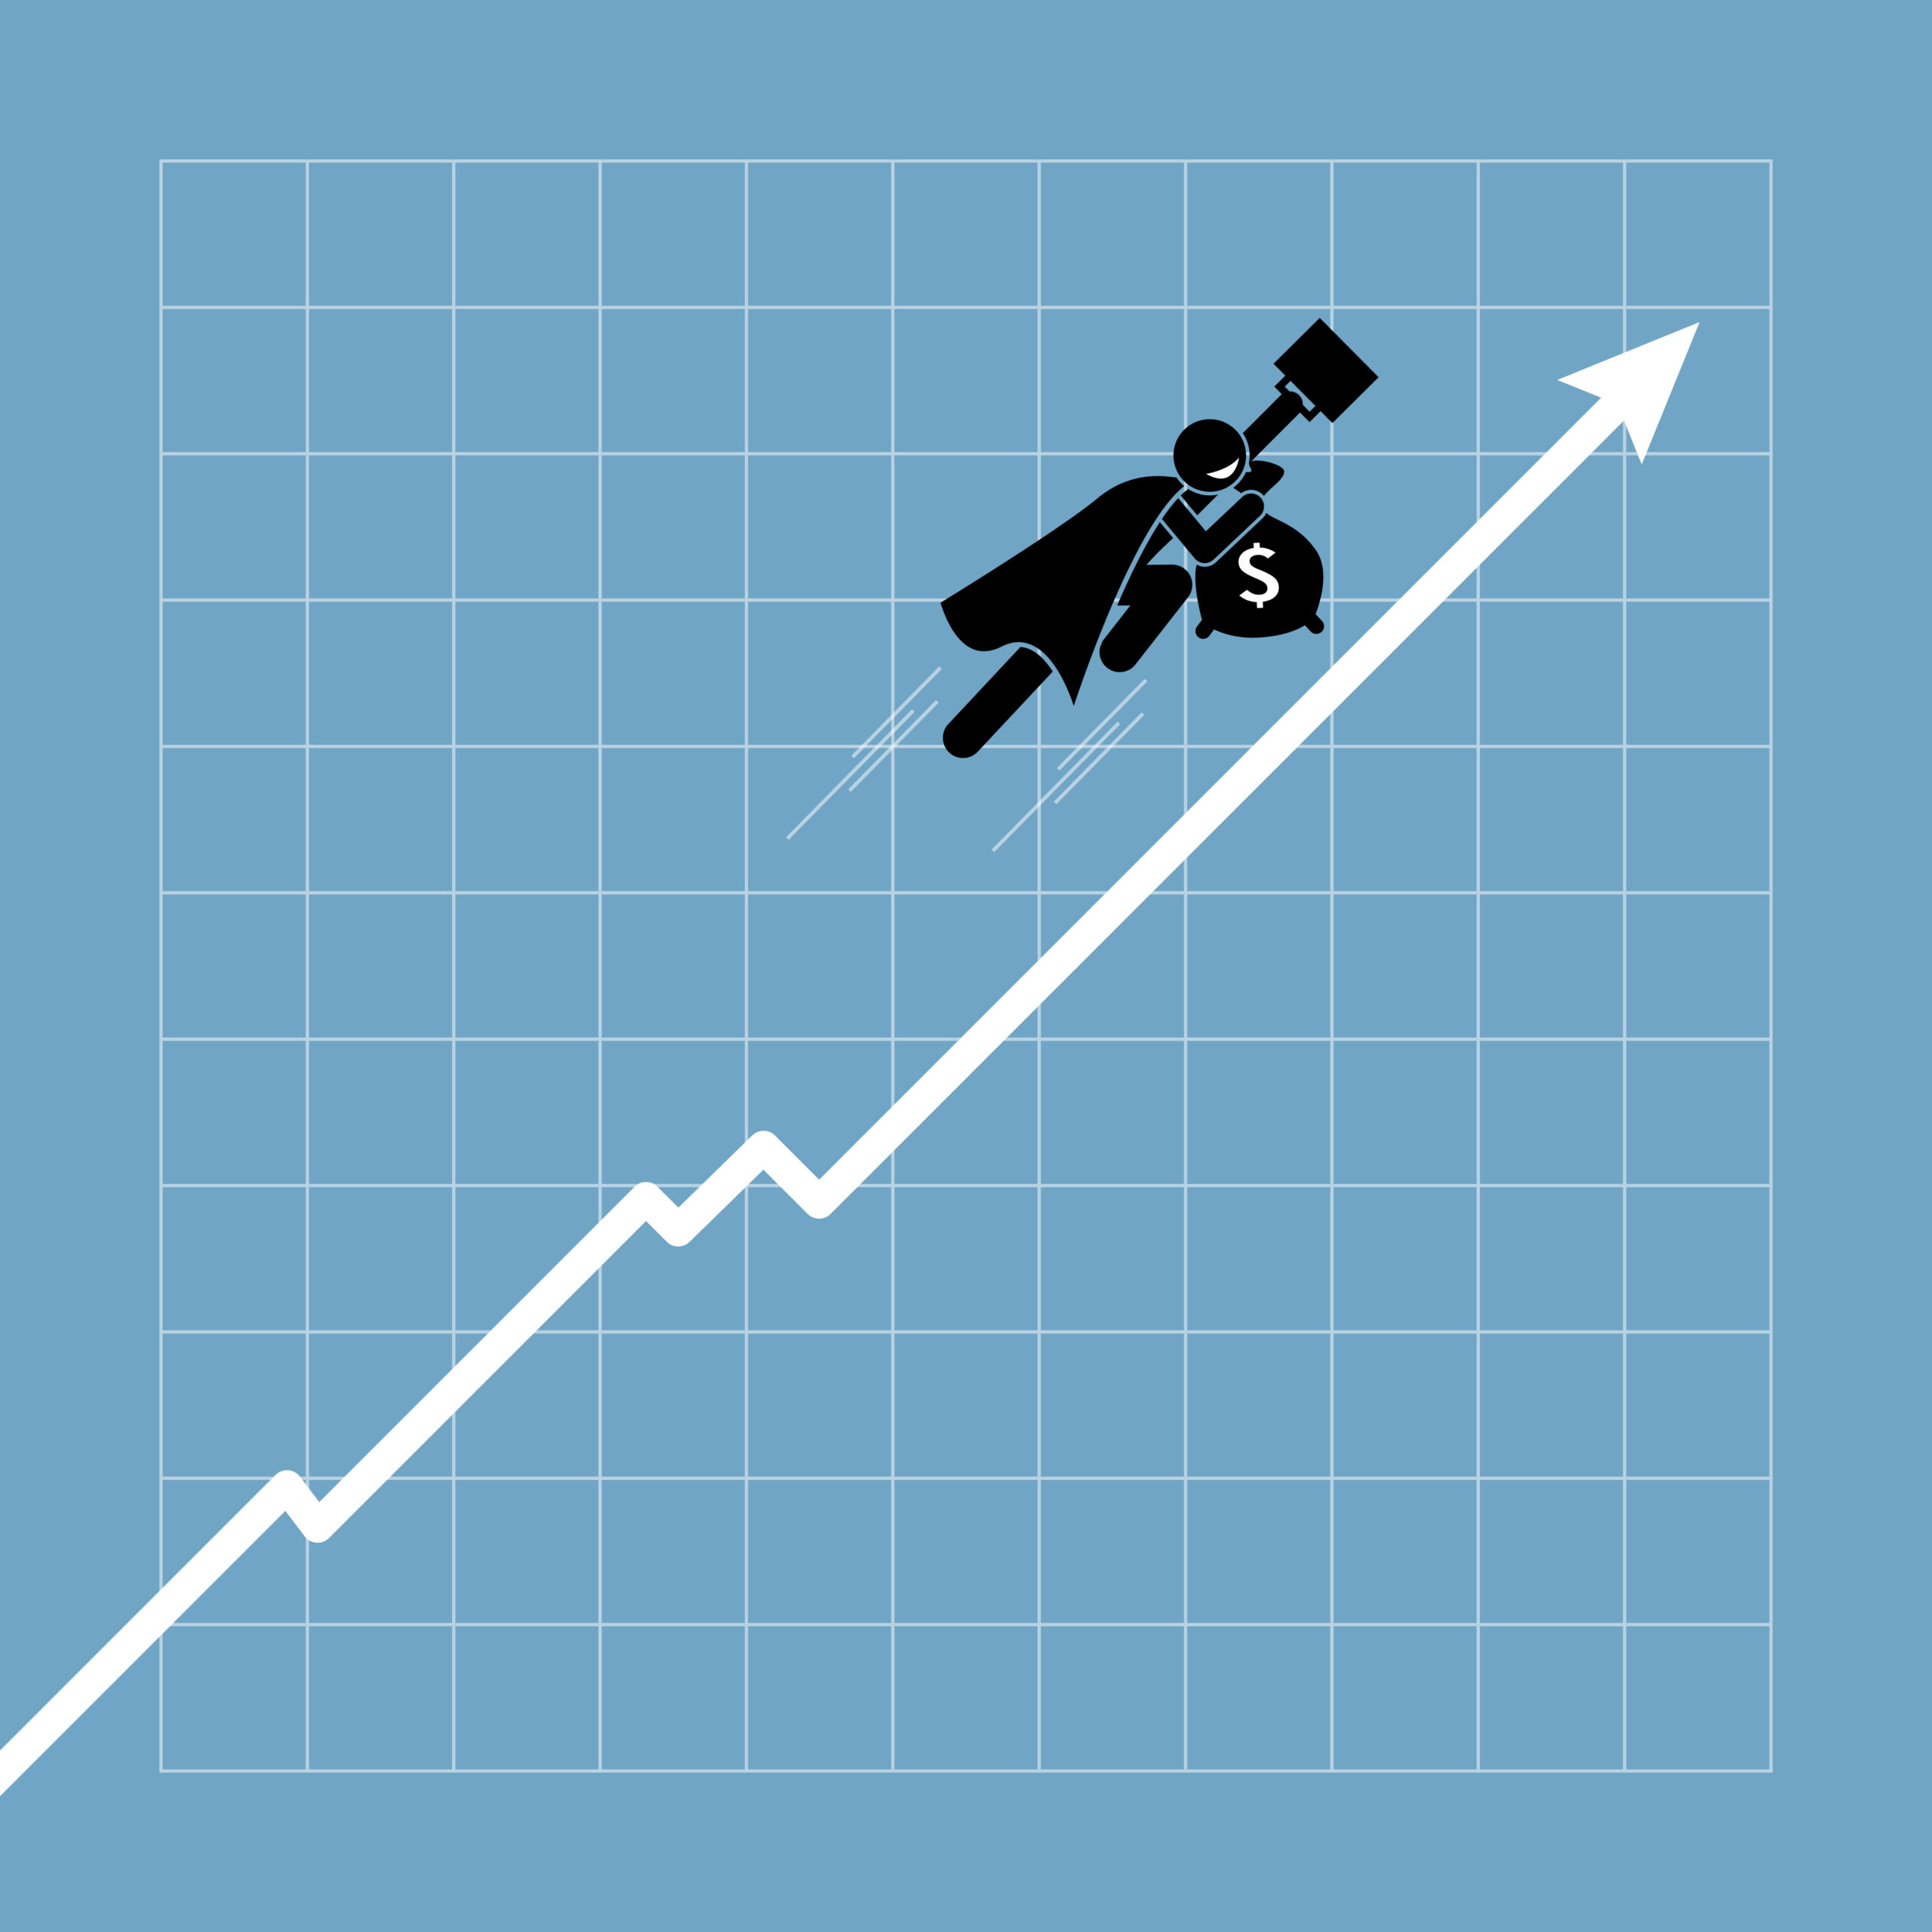 Illustration of a super-hero stick figure flying alongside a stock chart